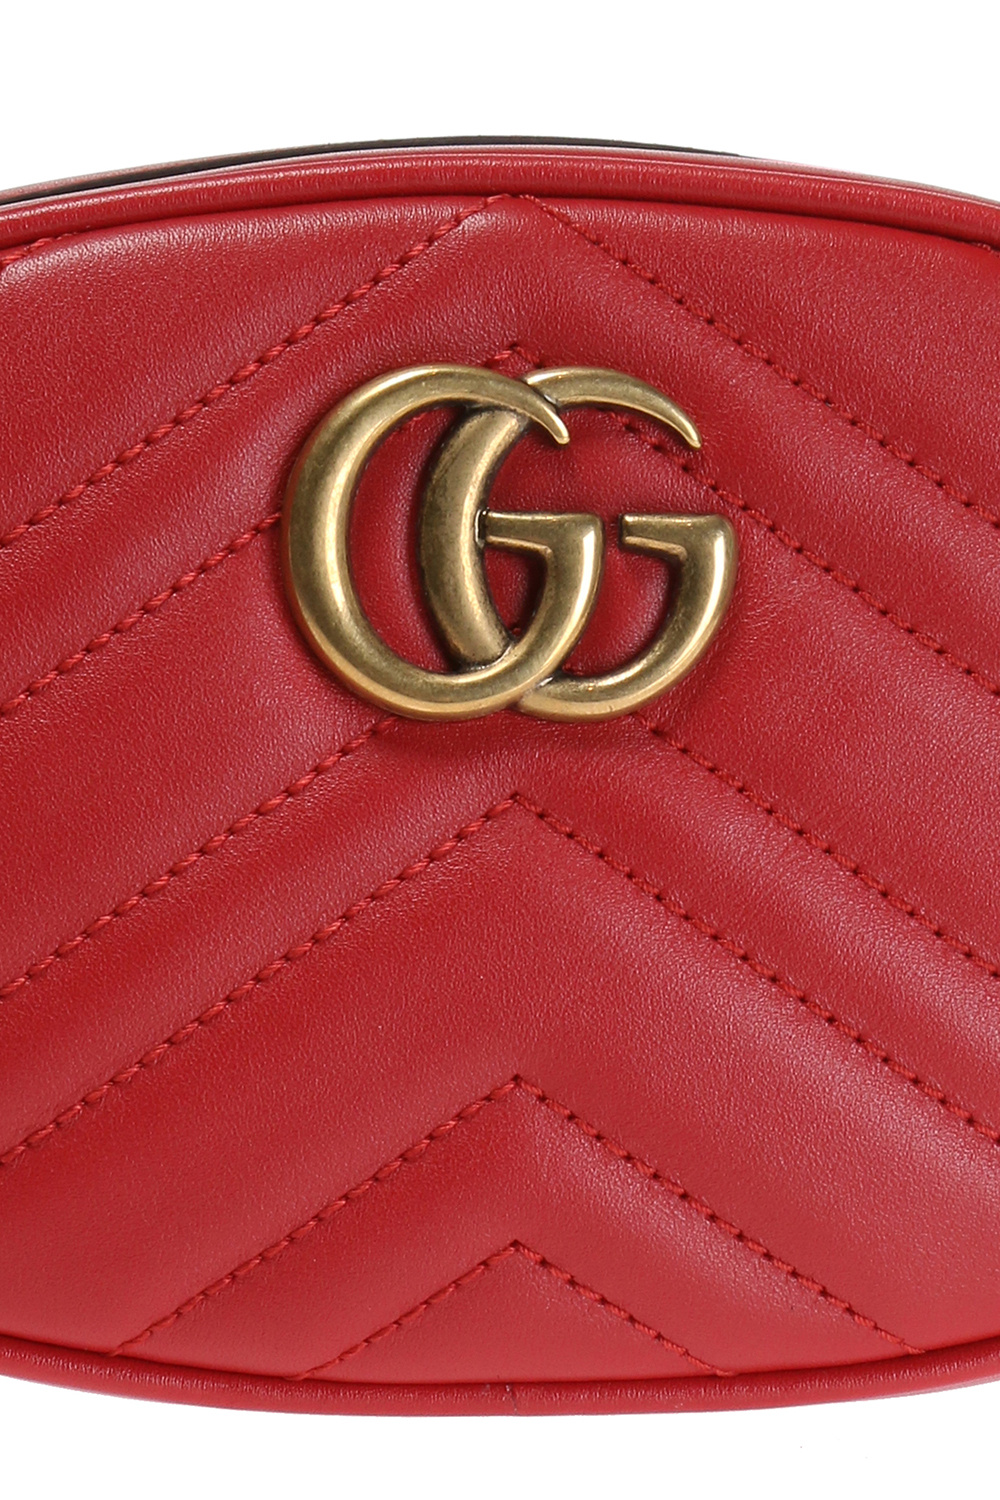 Gucci 'Gucci Dionysus shoulder bag in black leather